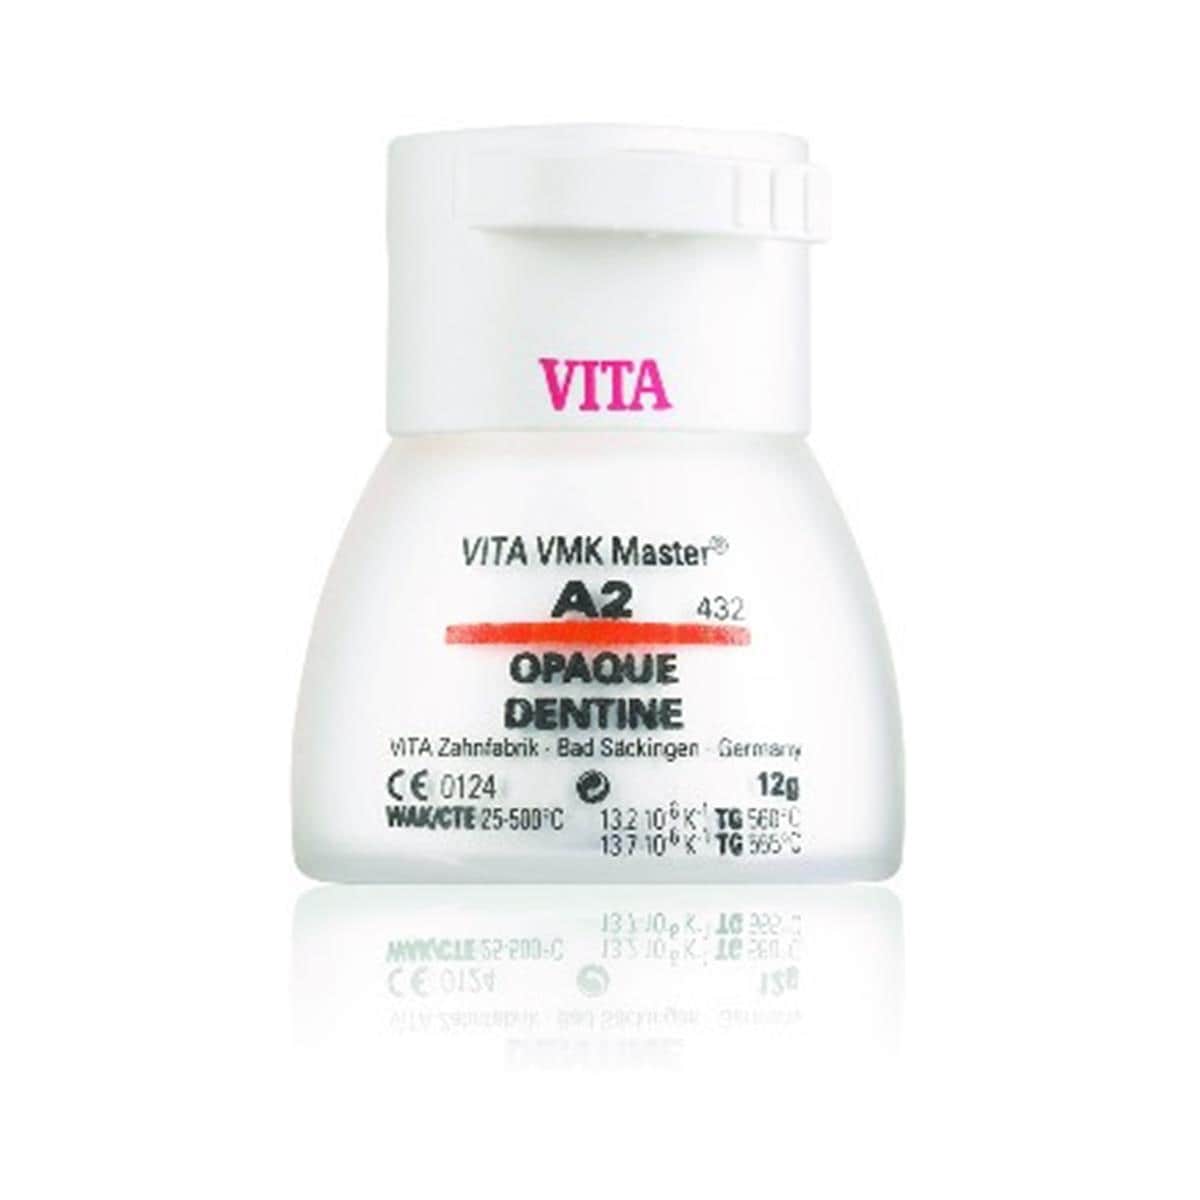 VMK Master VITA - Dentine Opaque - C1 - Le flacon de 12 g